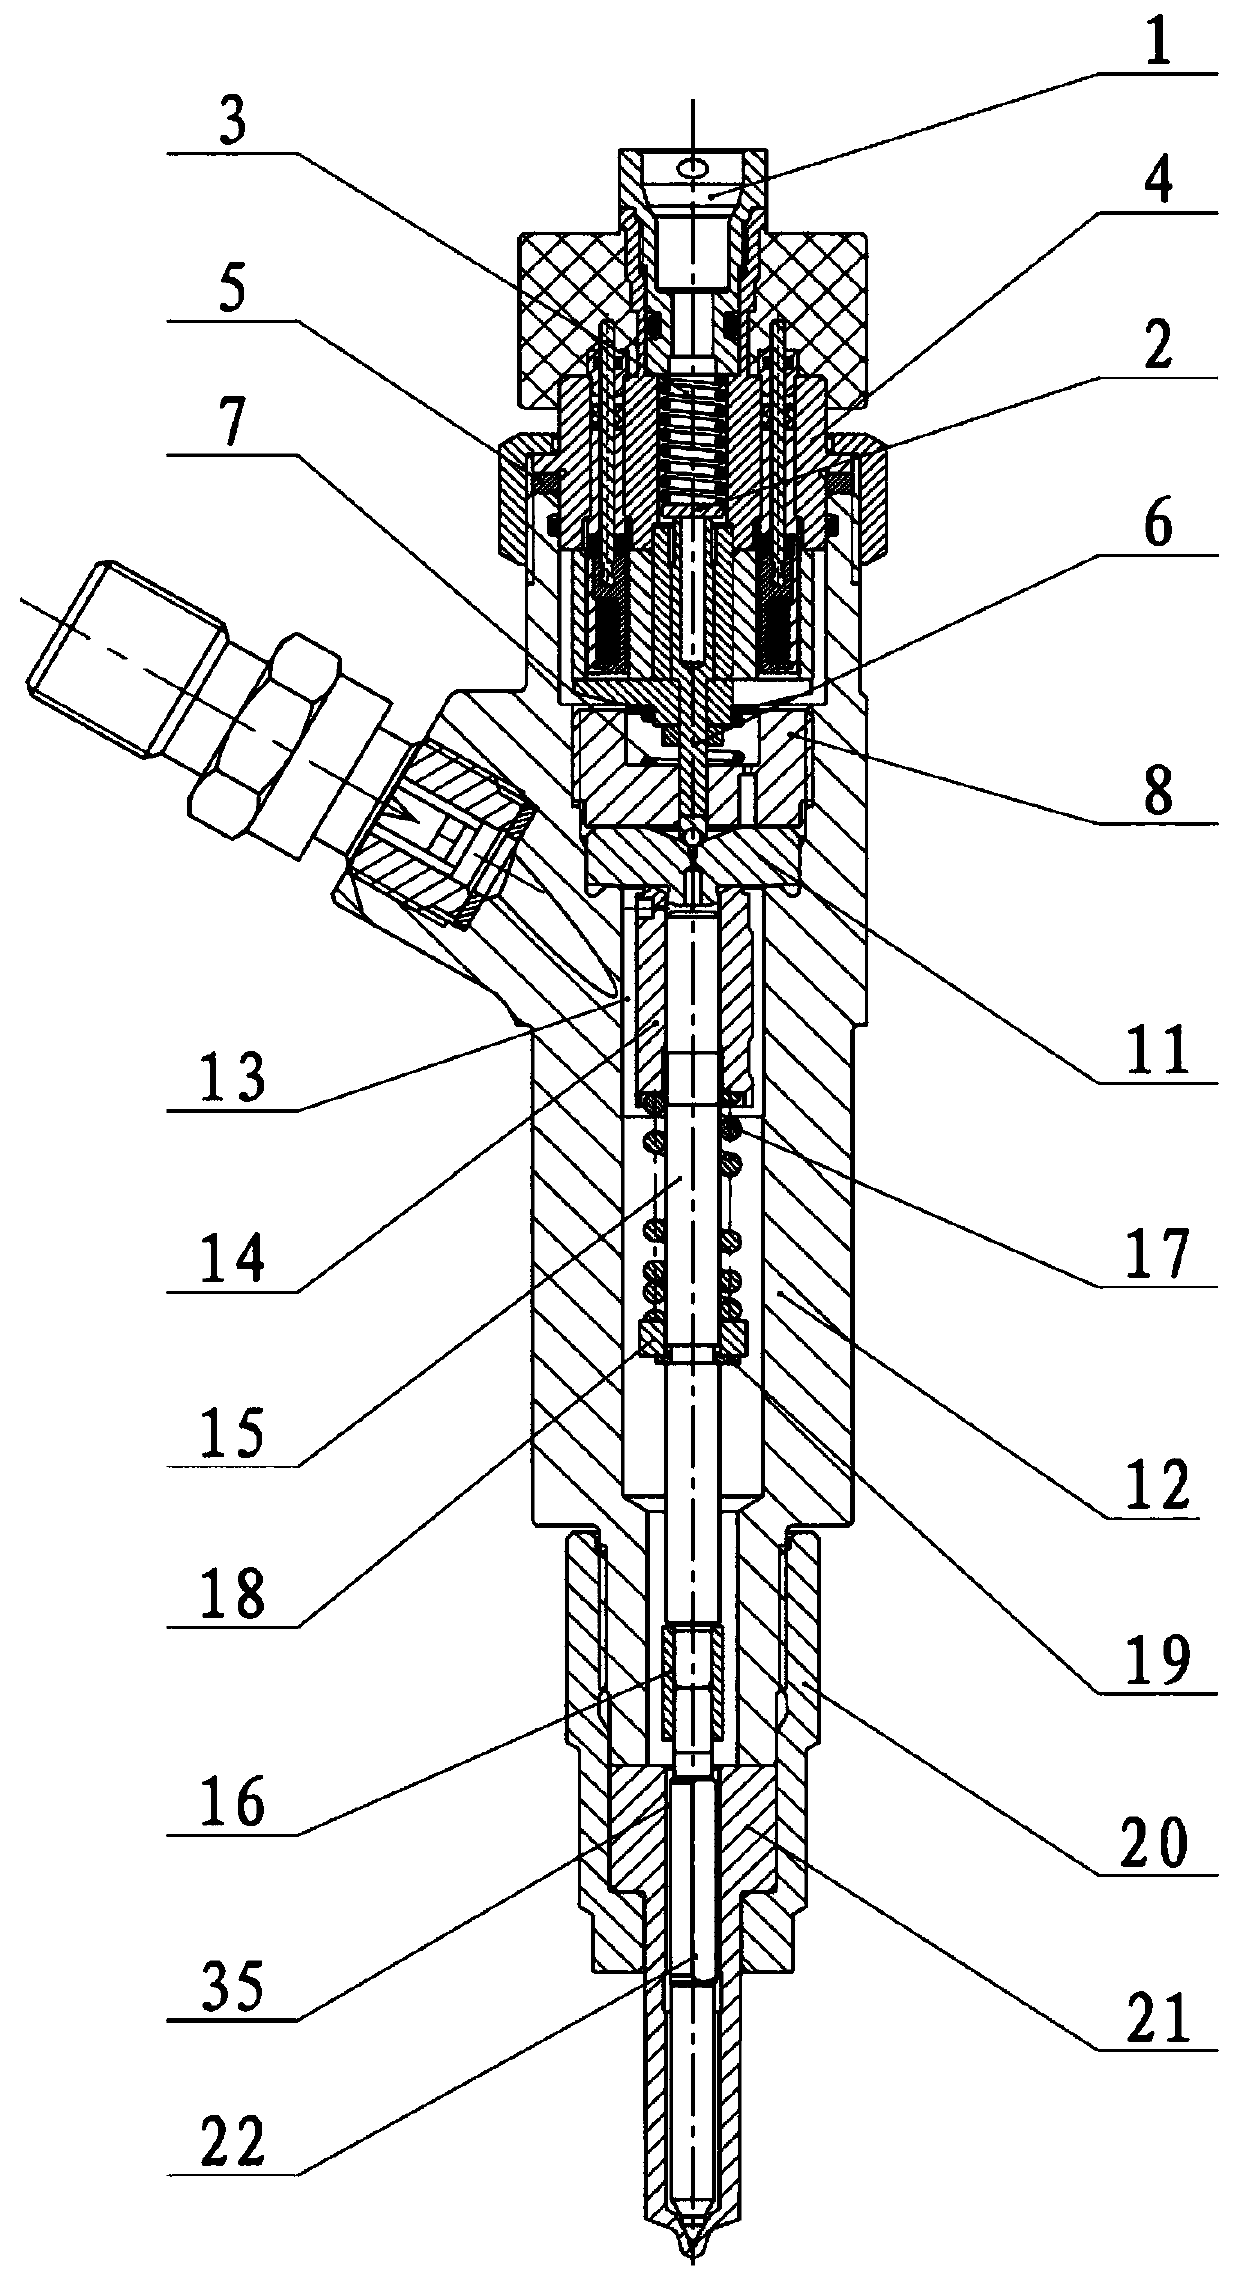 Center hole pressure accumulator non-static leak injector